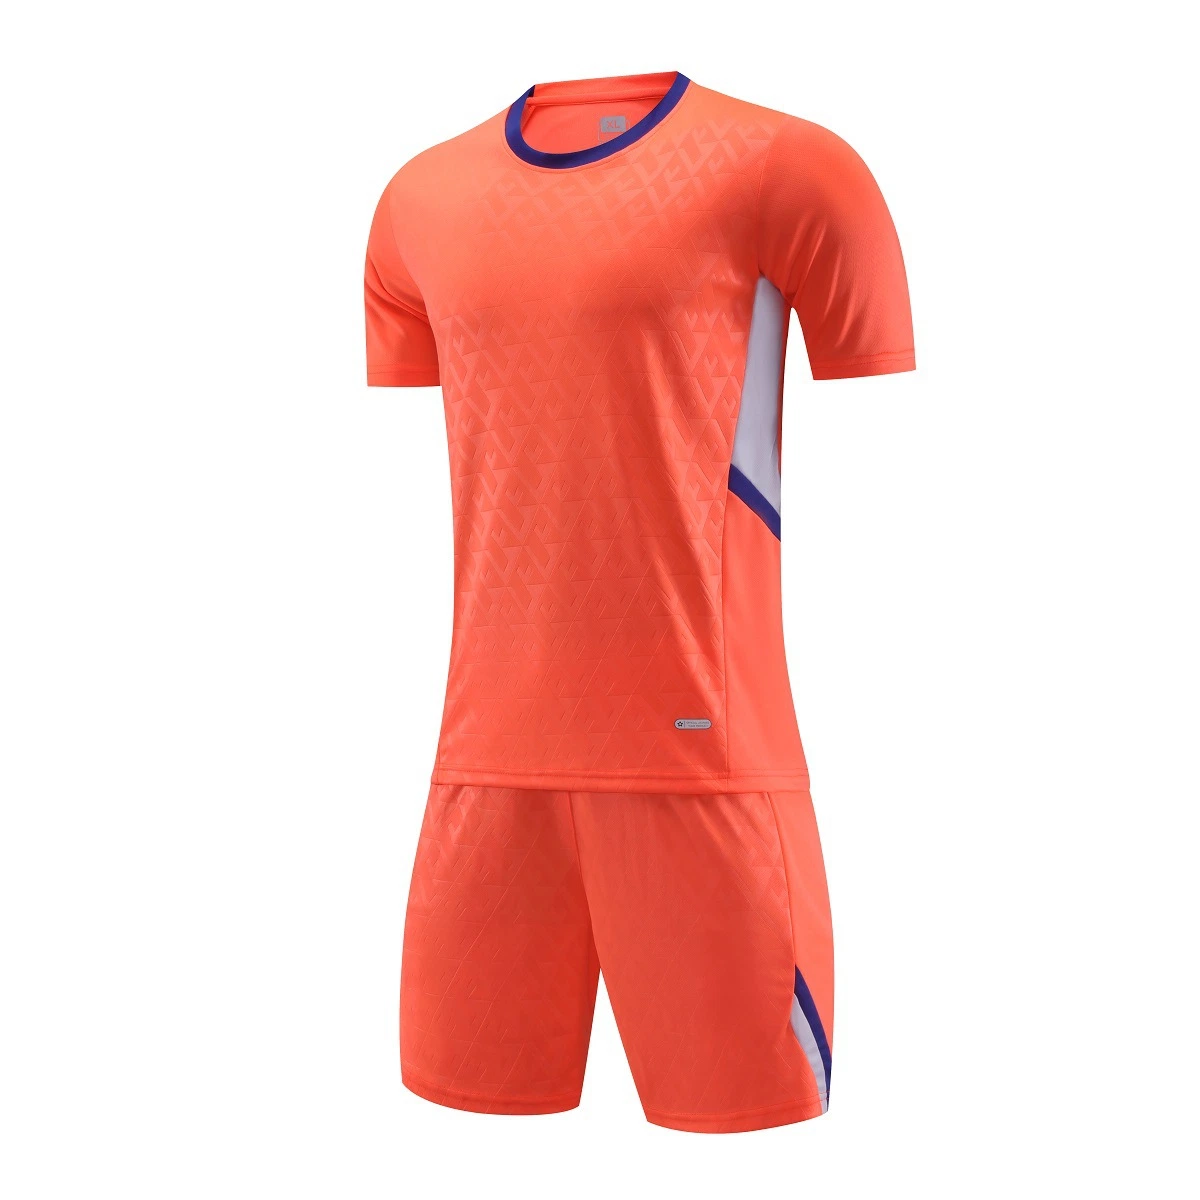 Adult Children&prime; S Football Suit Set Men&prime; S and Women&prime; S Sports Competition Training Uniform Jersey